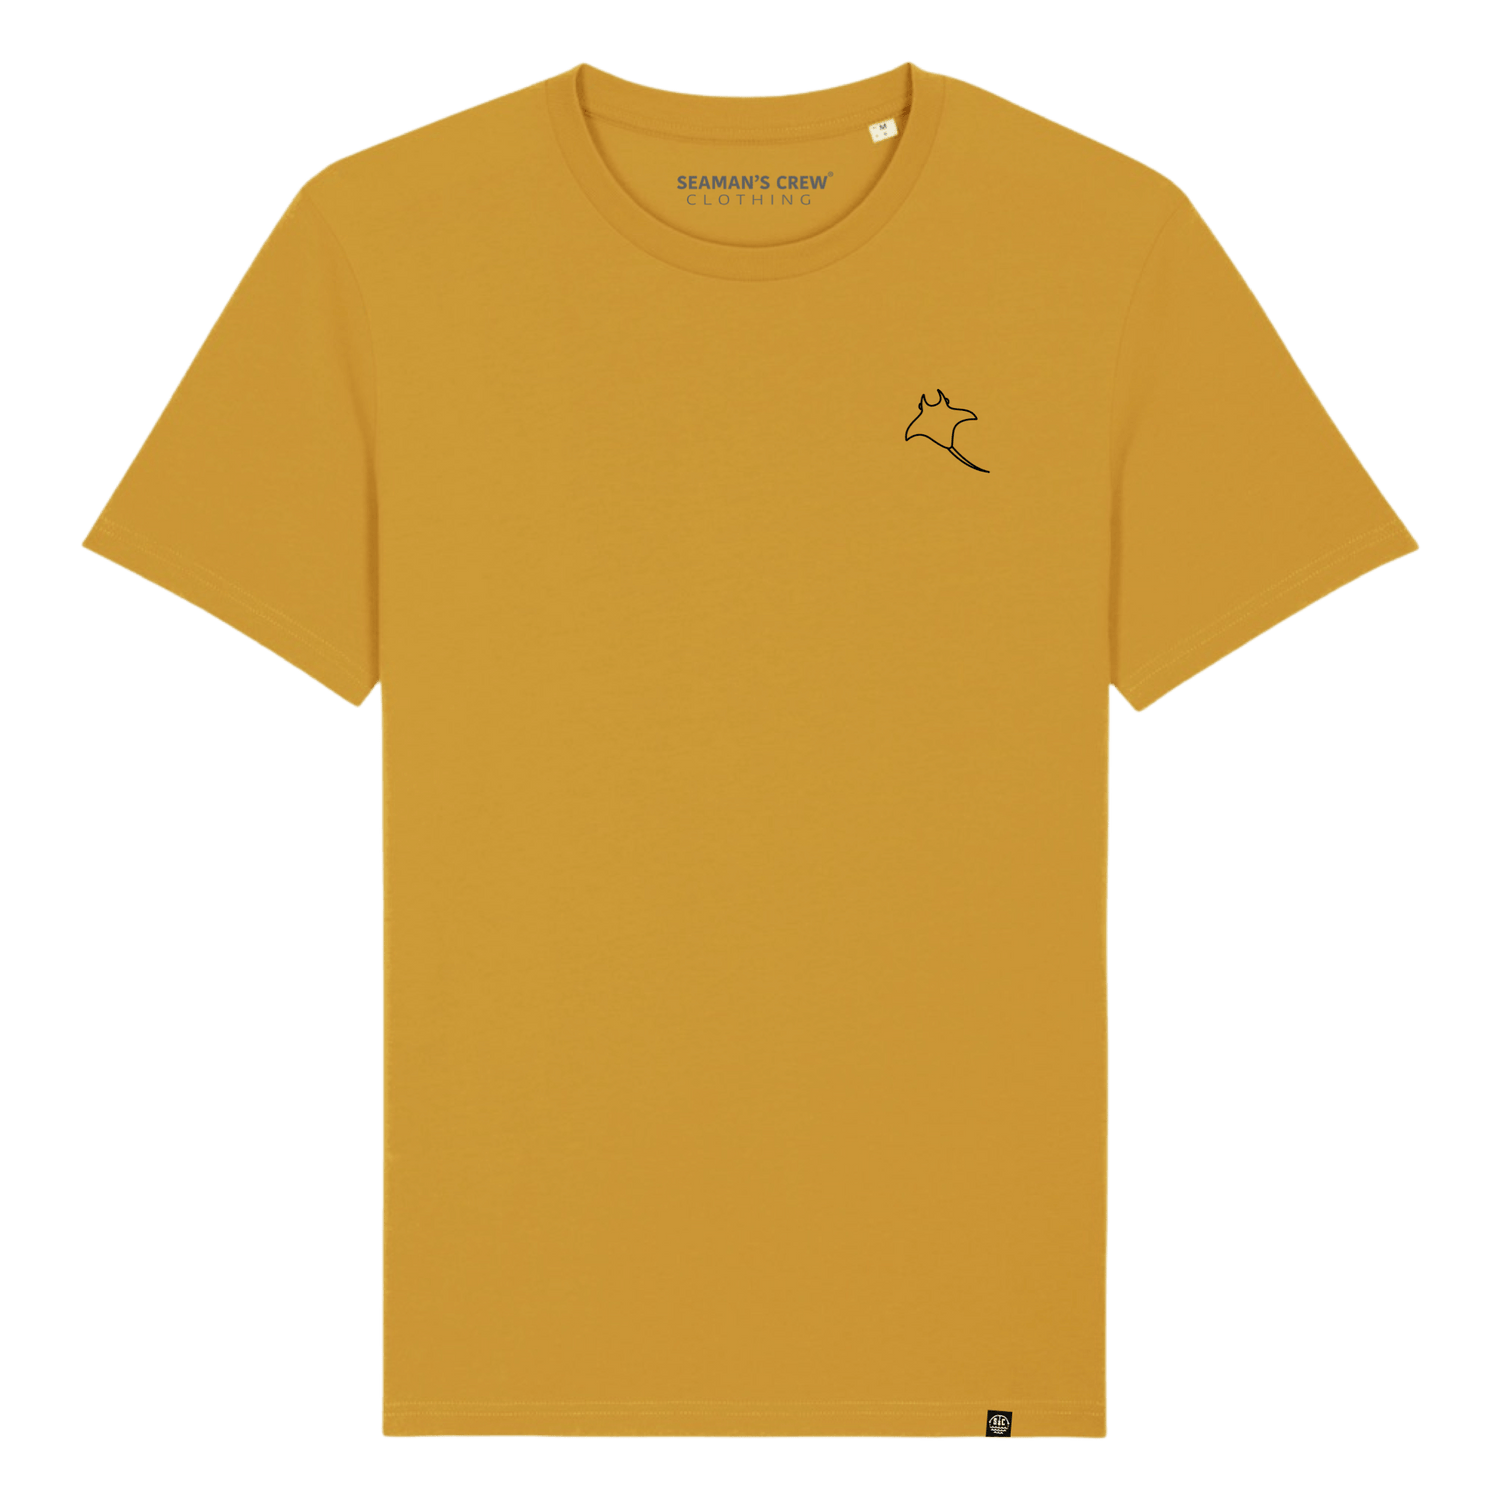 Manta embroidered T-shirt